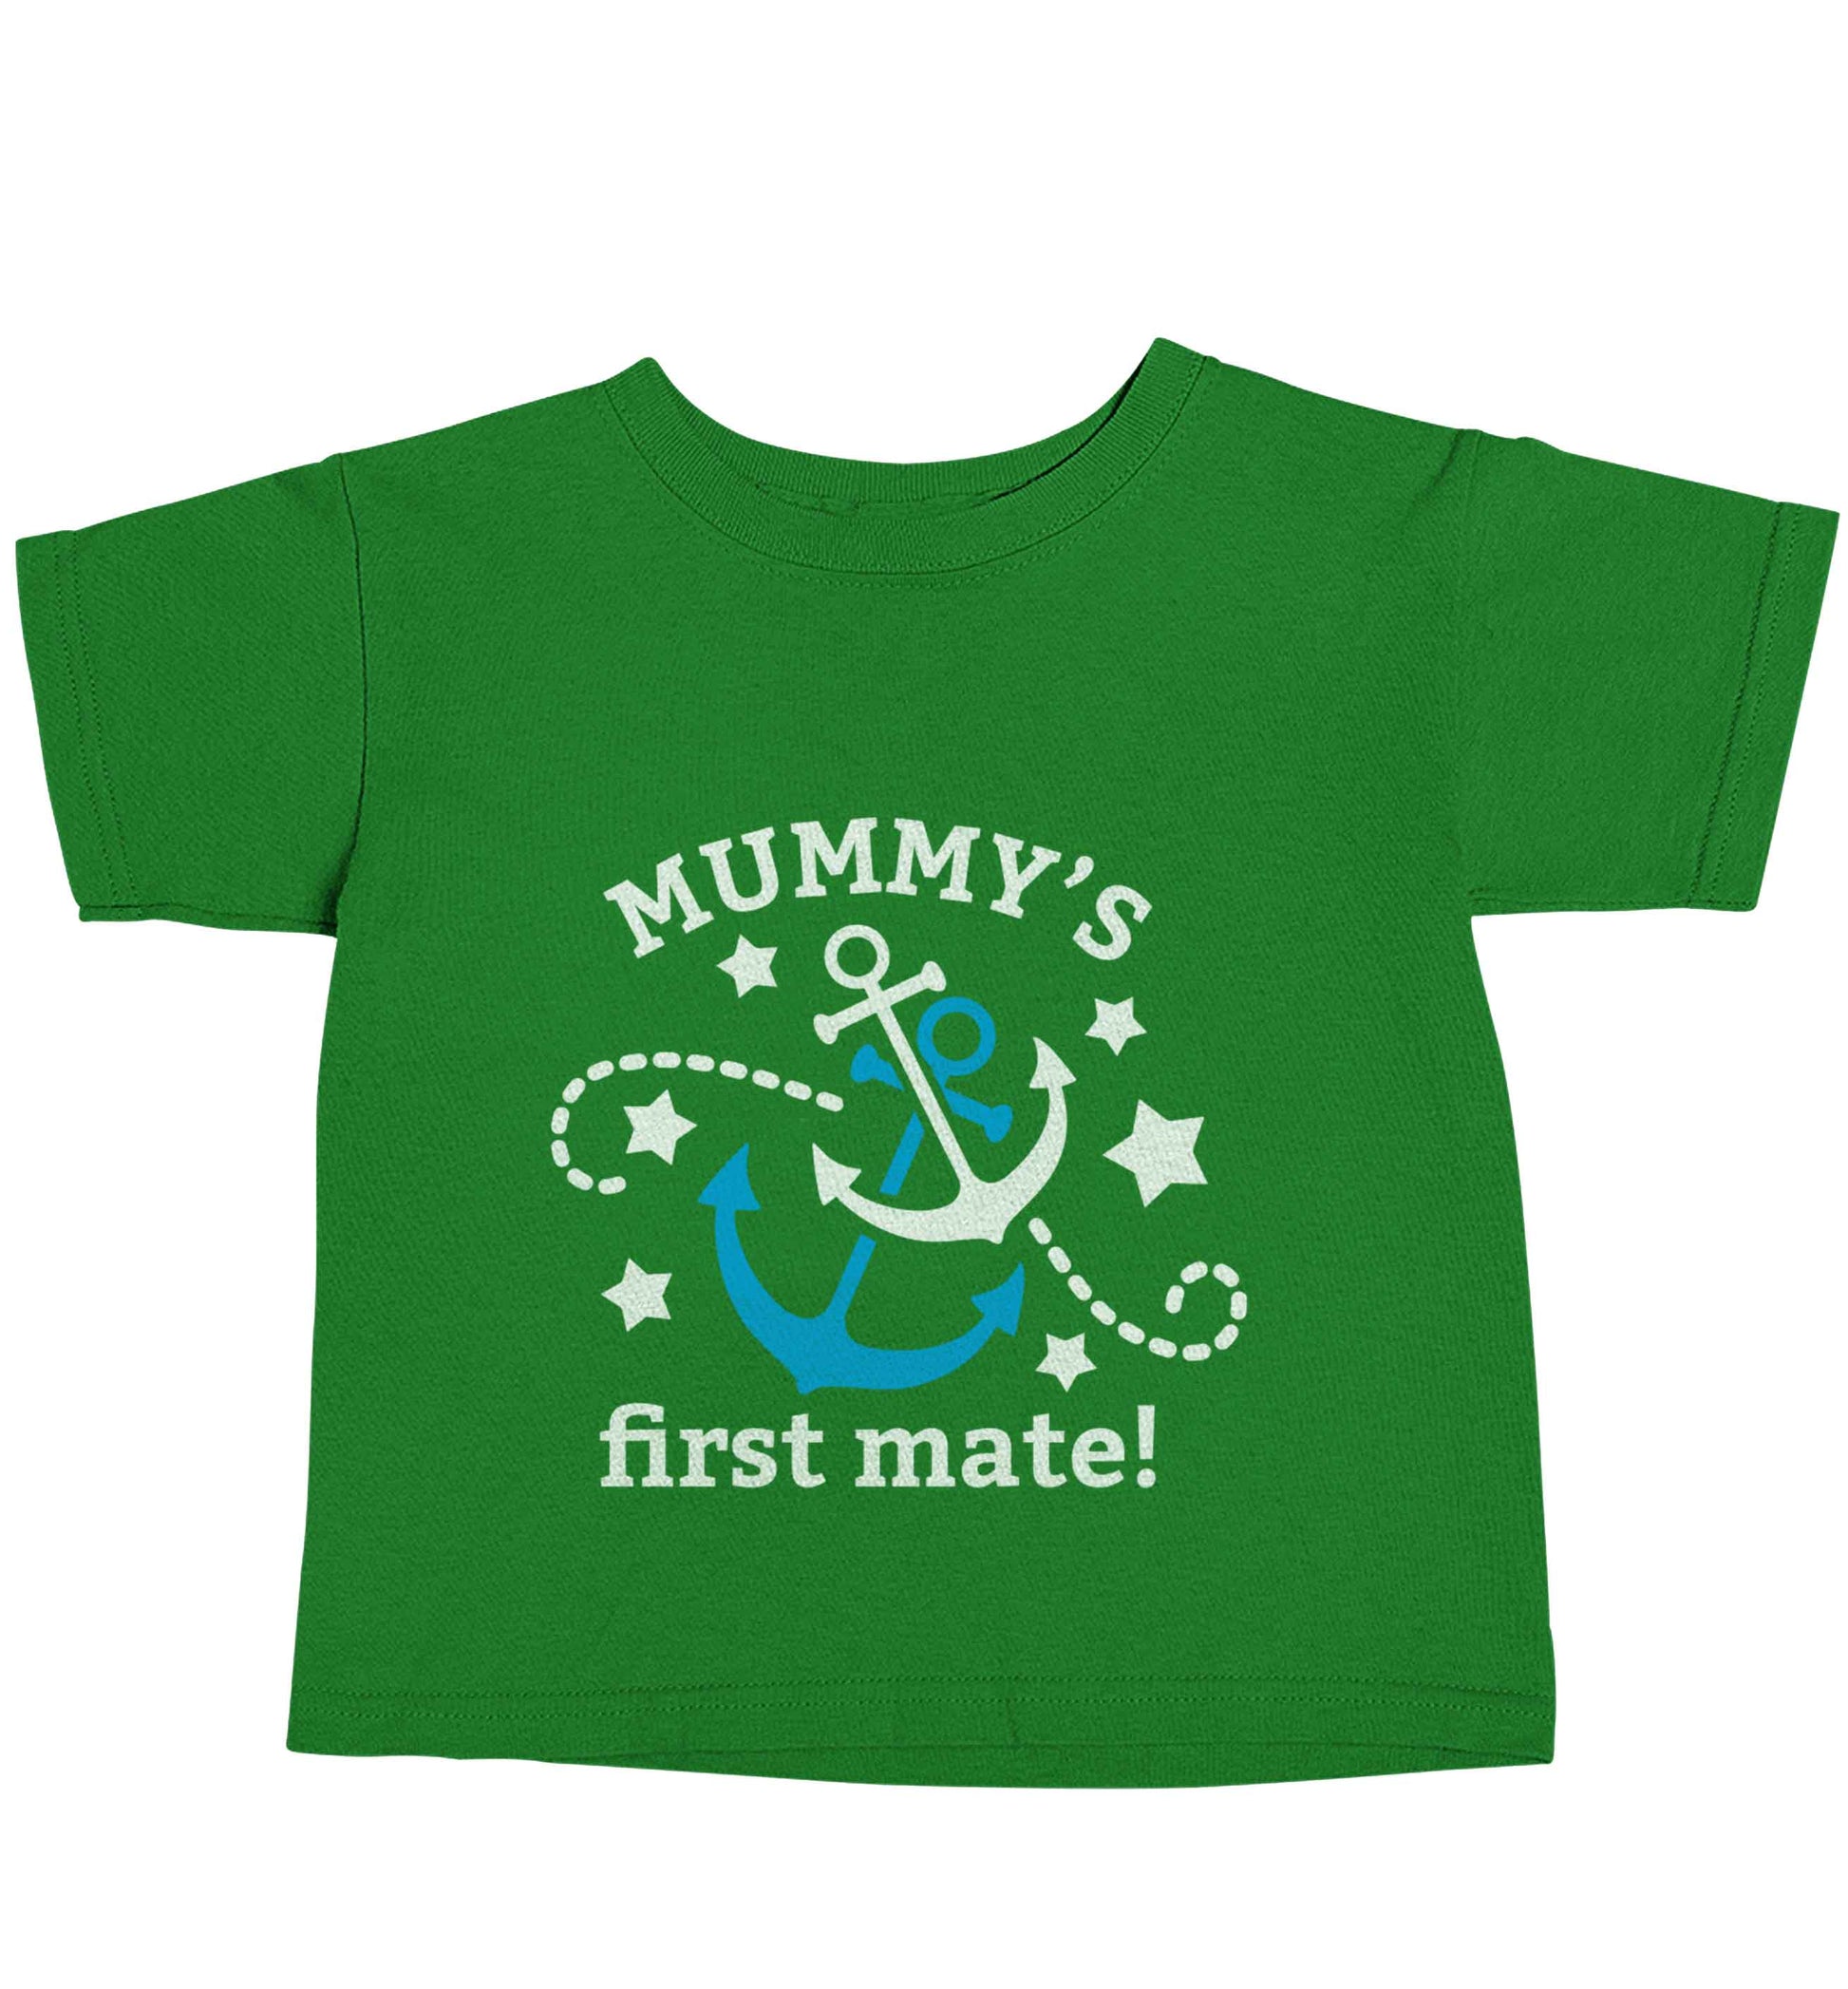 Mummy's First Mate green baby toddler Tshirt 2 Years